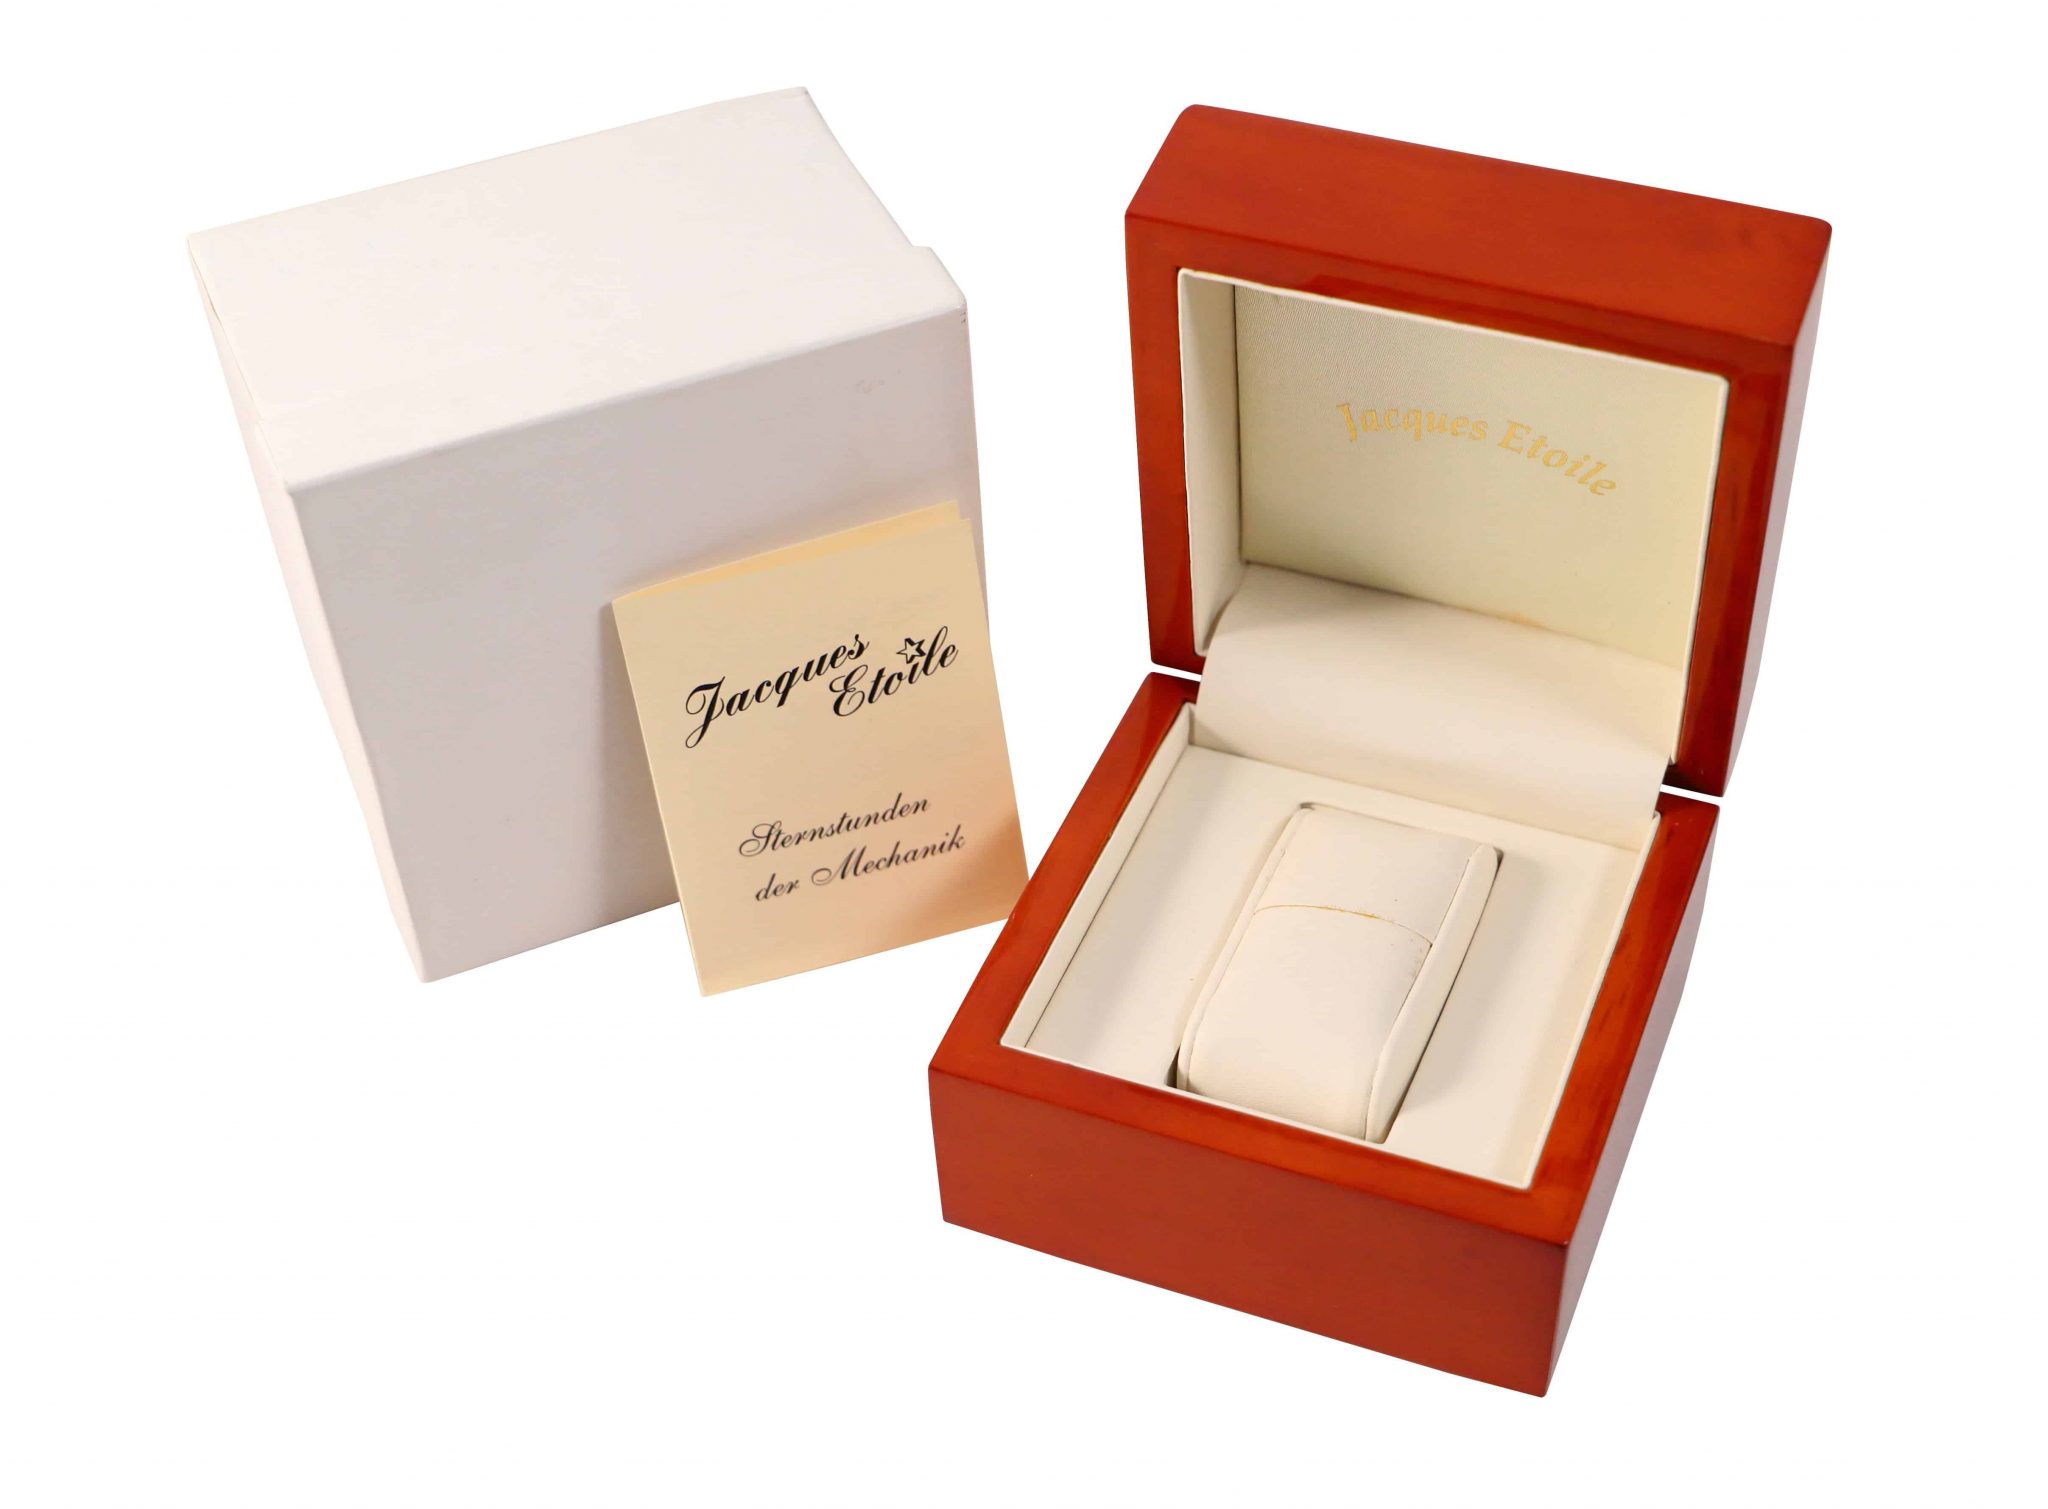 Jacques Etoile Watch Box - Rare Watch Parts